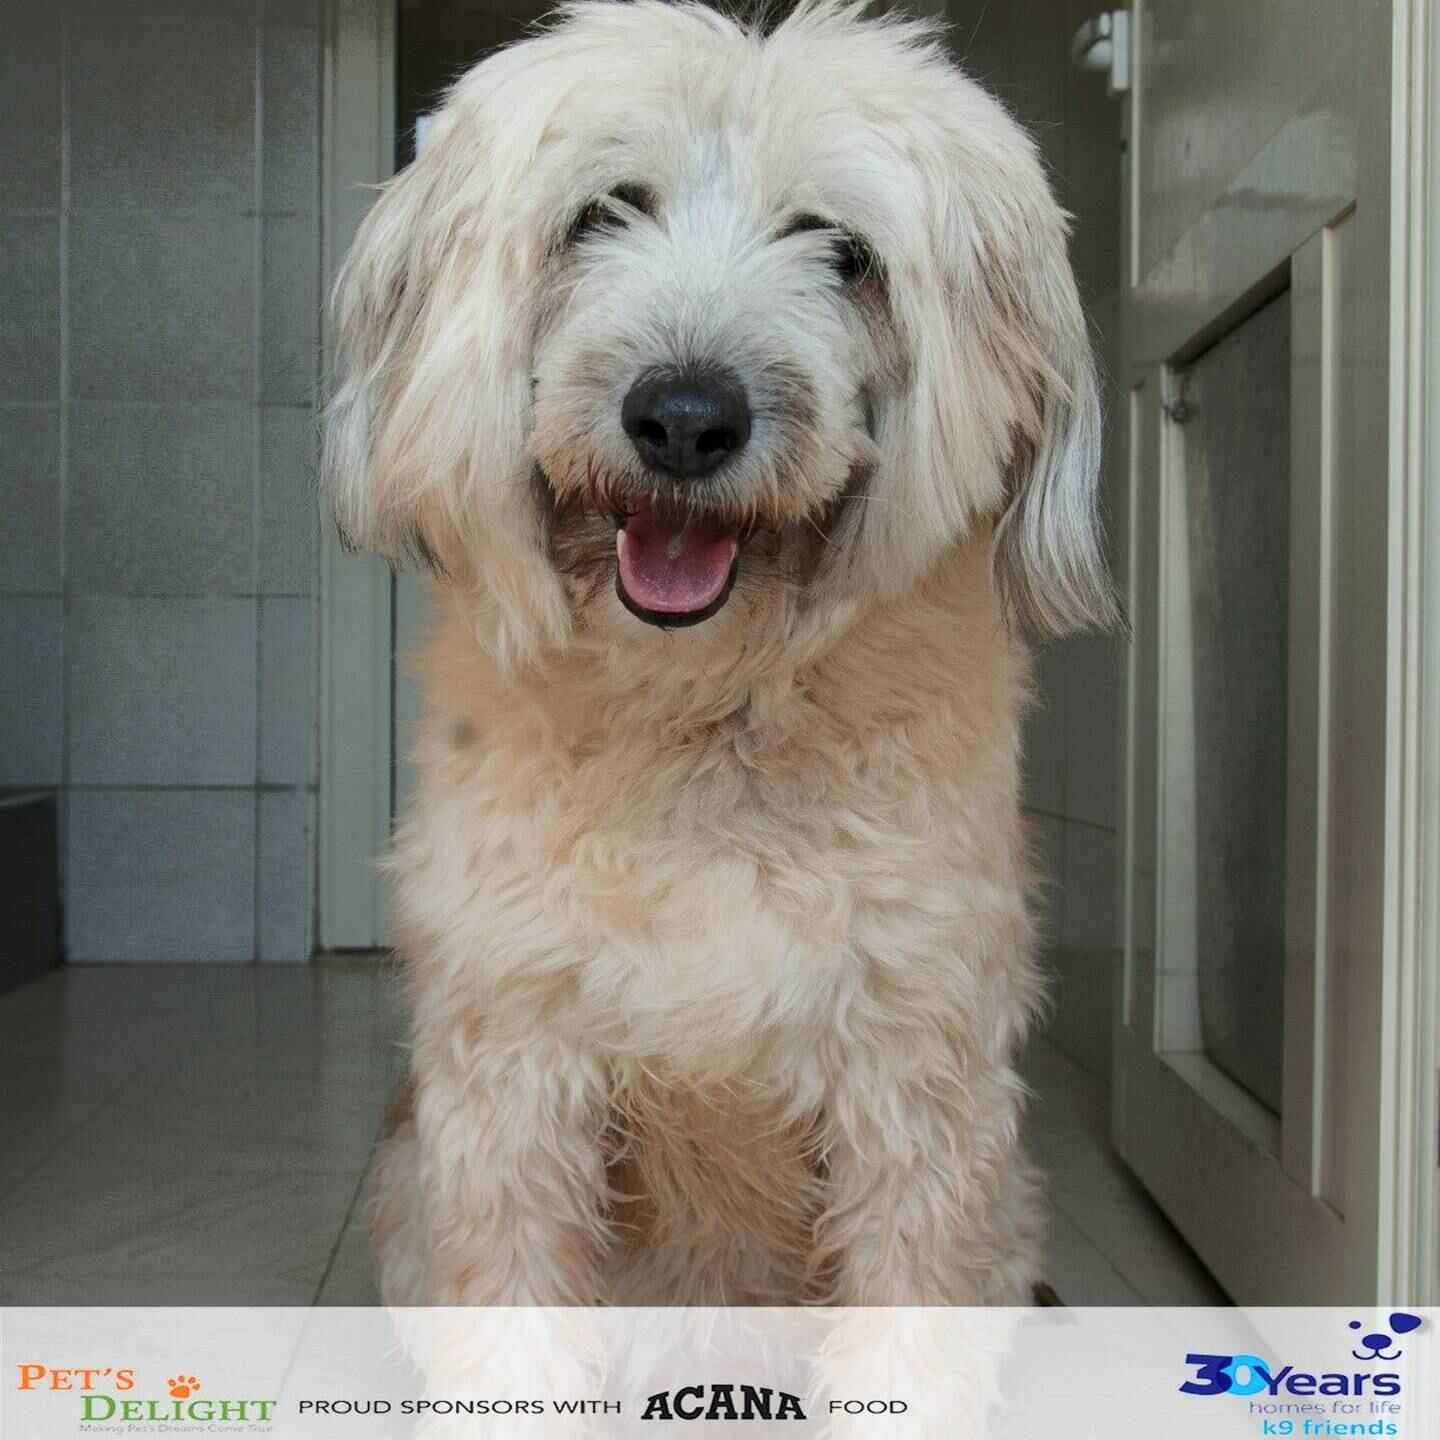 Shabby is one of the dogs up for adoption through K9 Friends Dubai. Courtesy K9 Friends Dubai